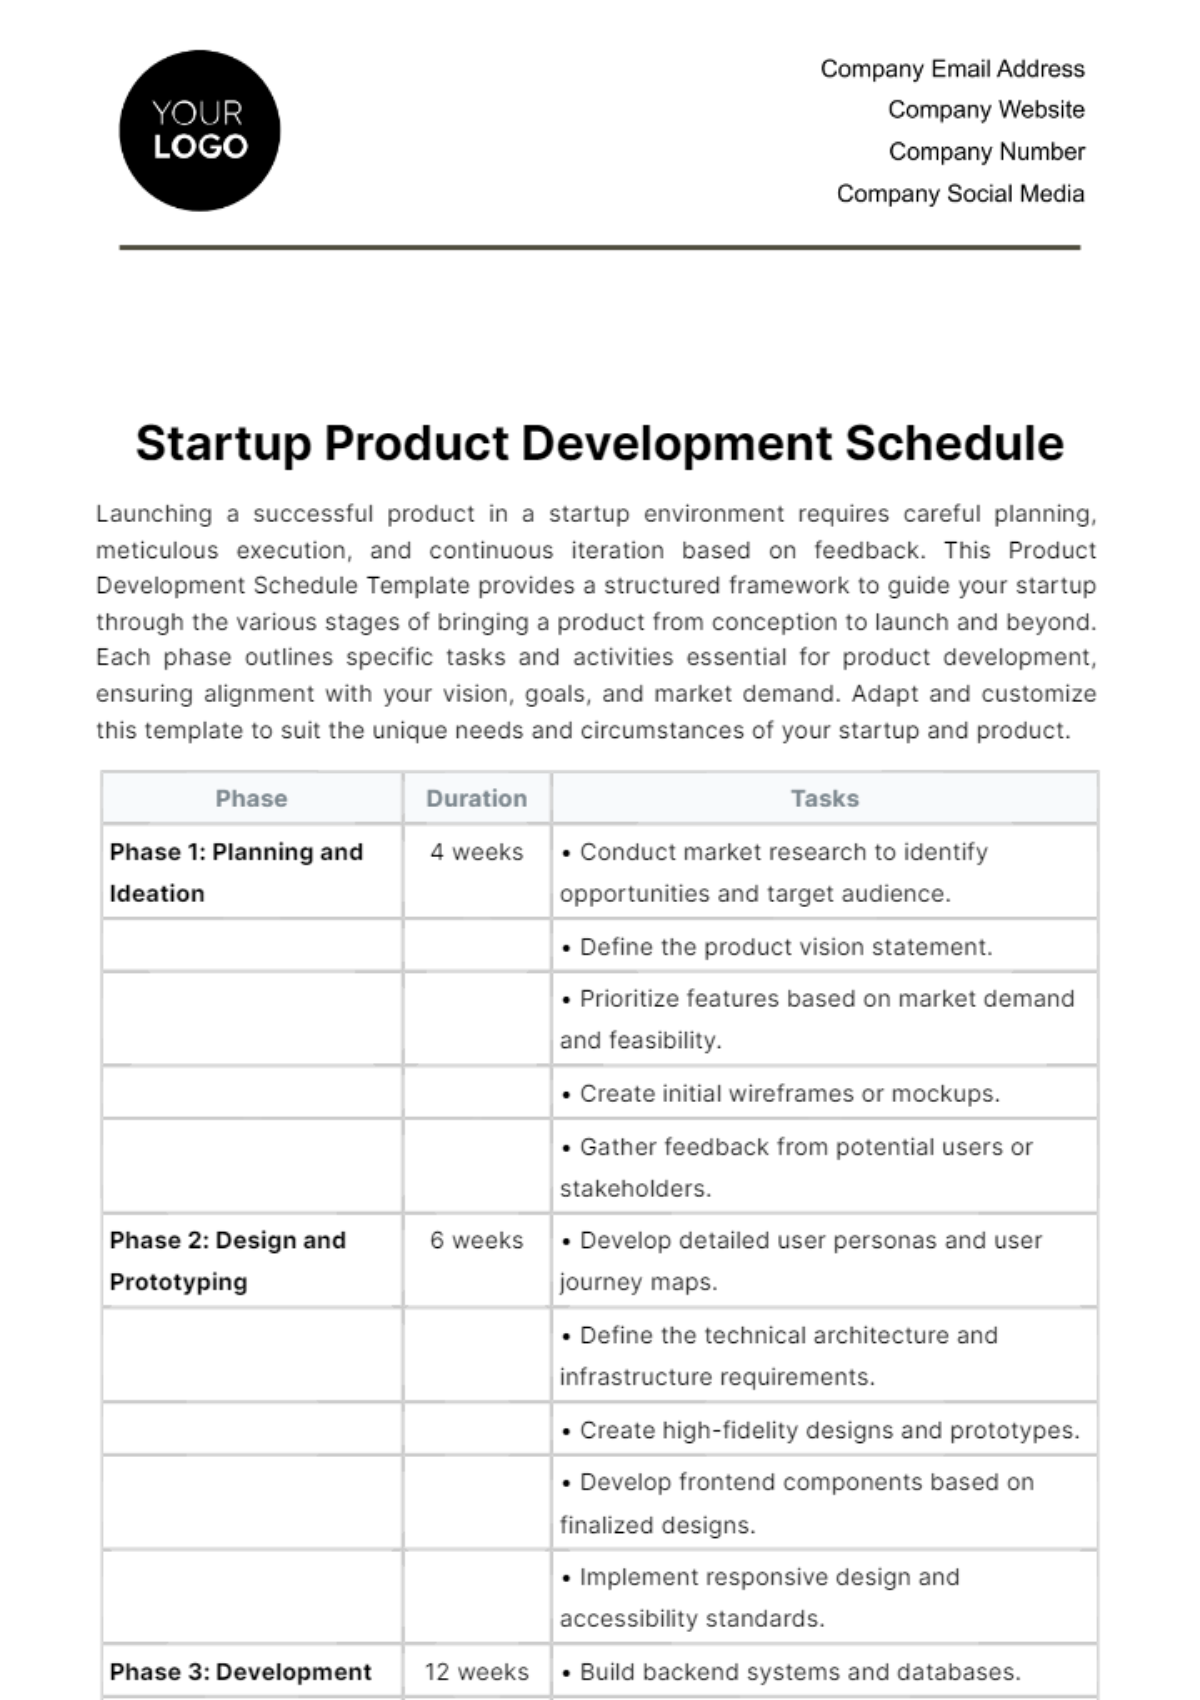 Startup Product Development Schedule Template